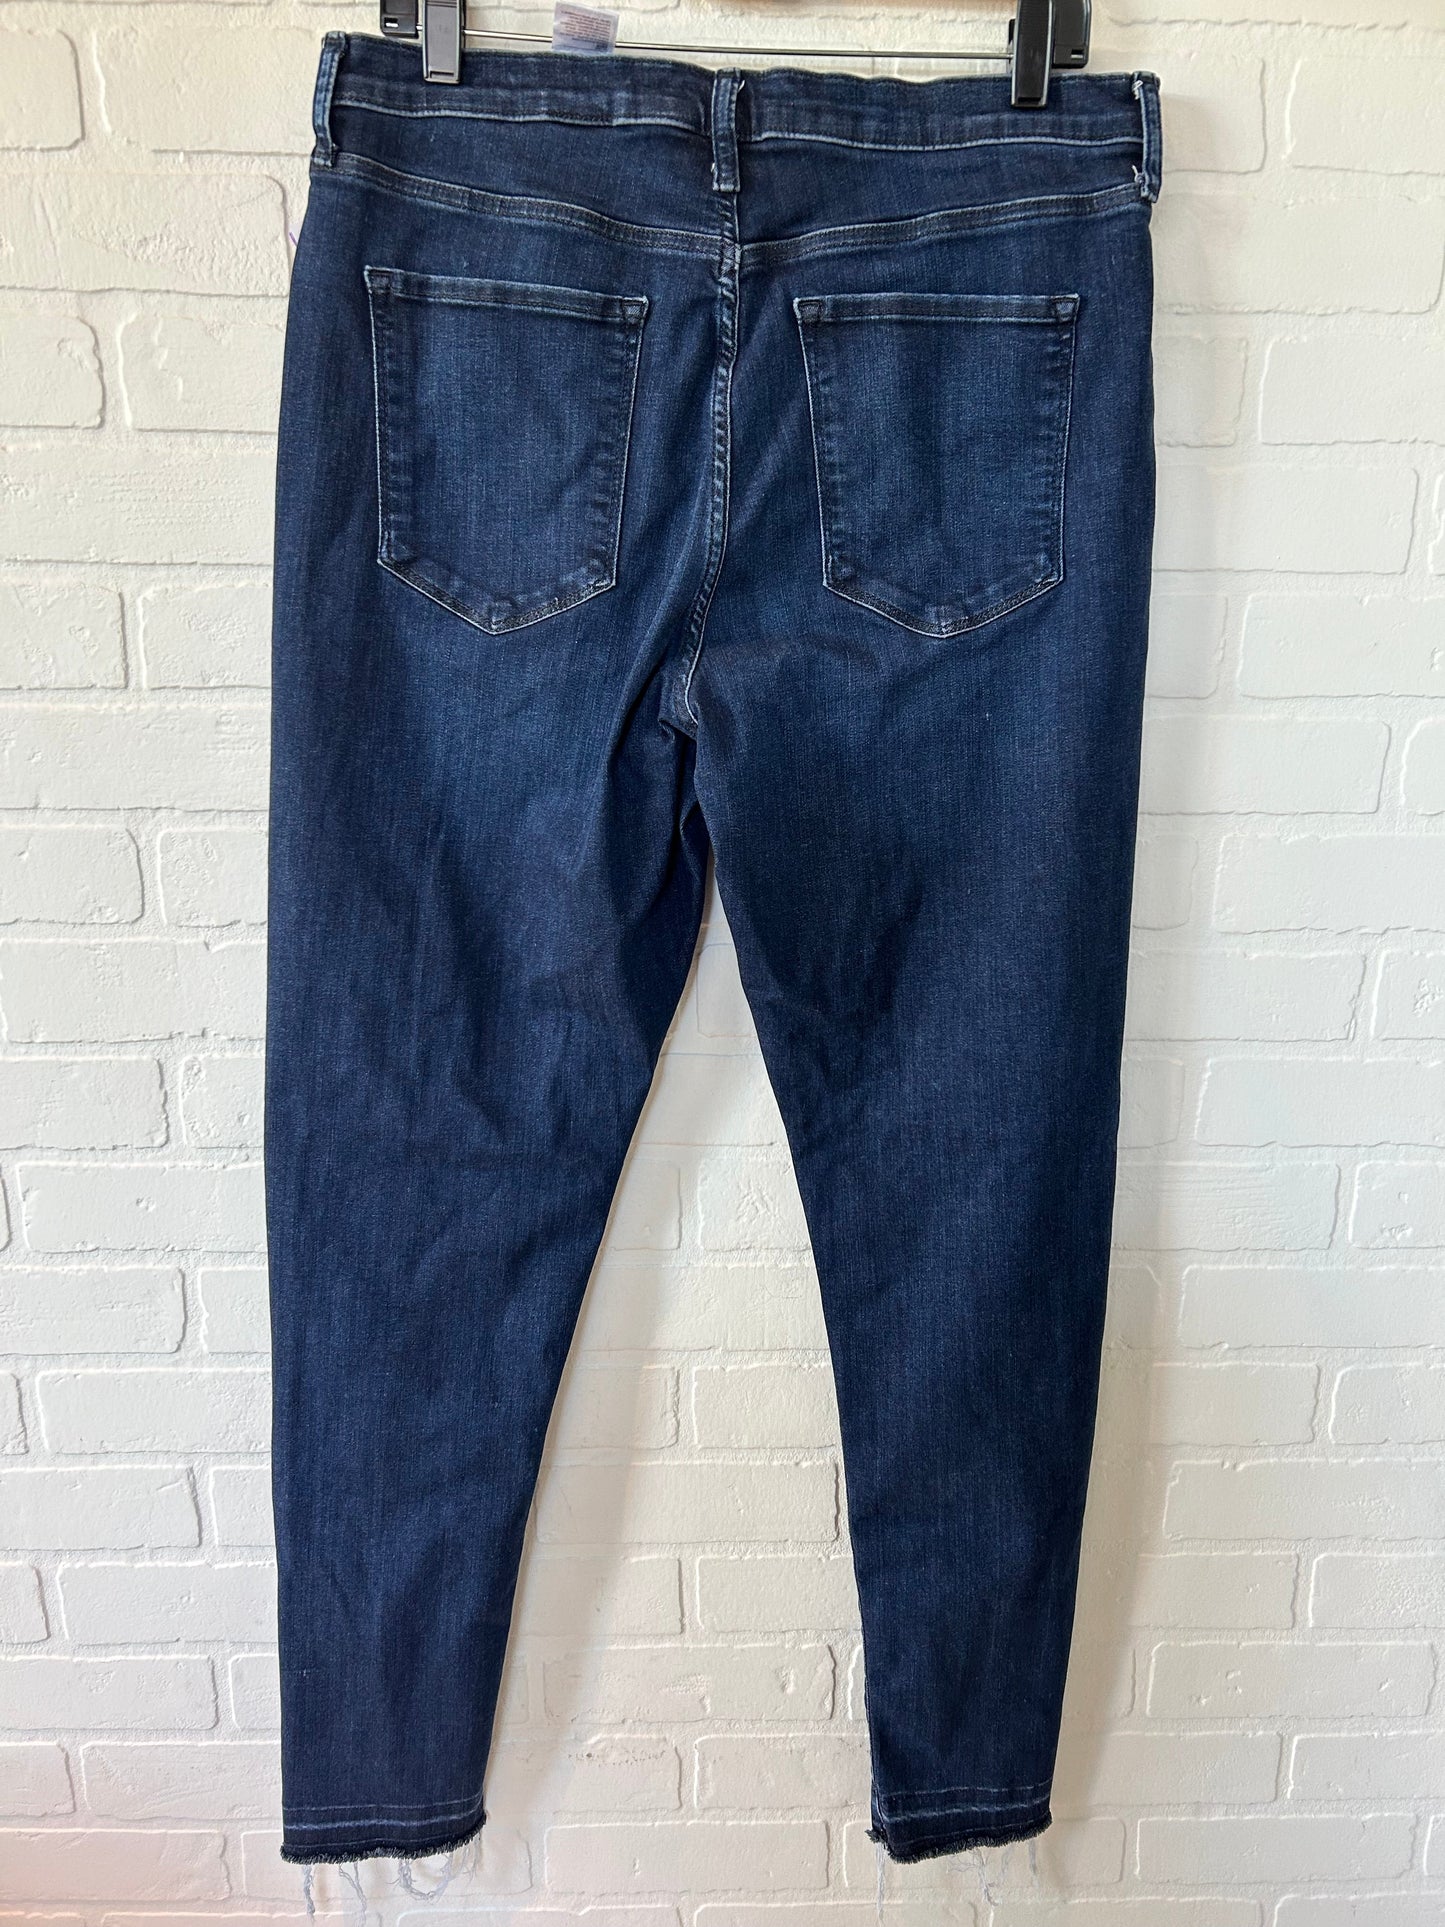 Blue Denim Jeans Skinny Banana Republic, Size 14tall